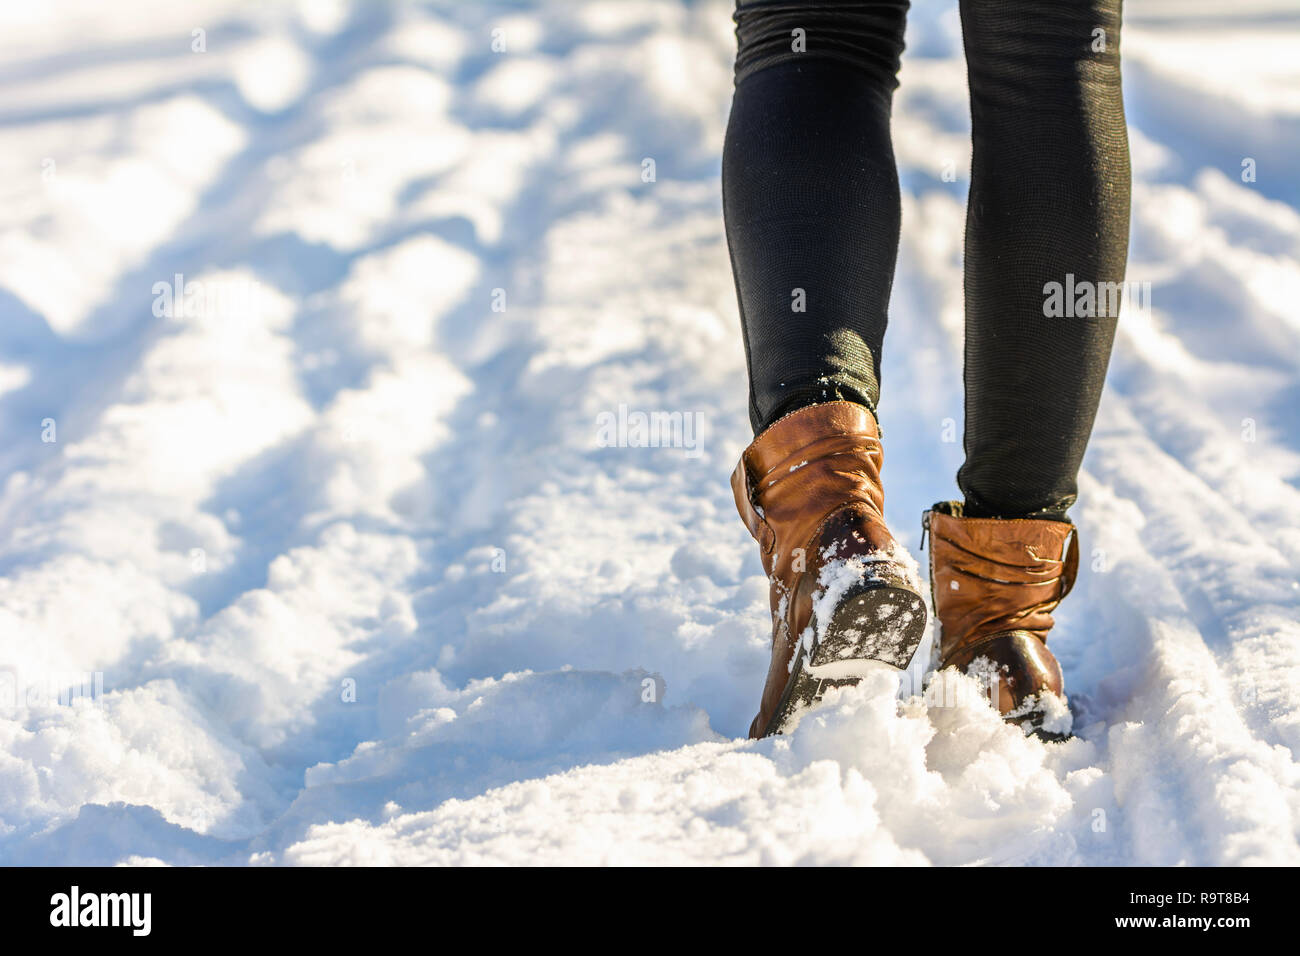 https://c8.alamy.com/comp/R9T8B4/female-feet-in-boots-and-leggings-winter-walking-in-snow-R9T8B4.jpg